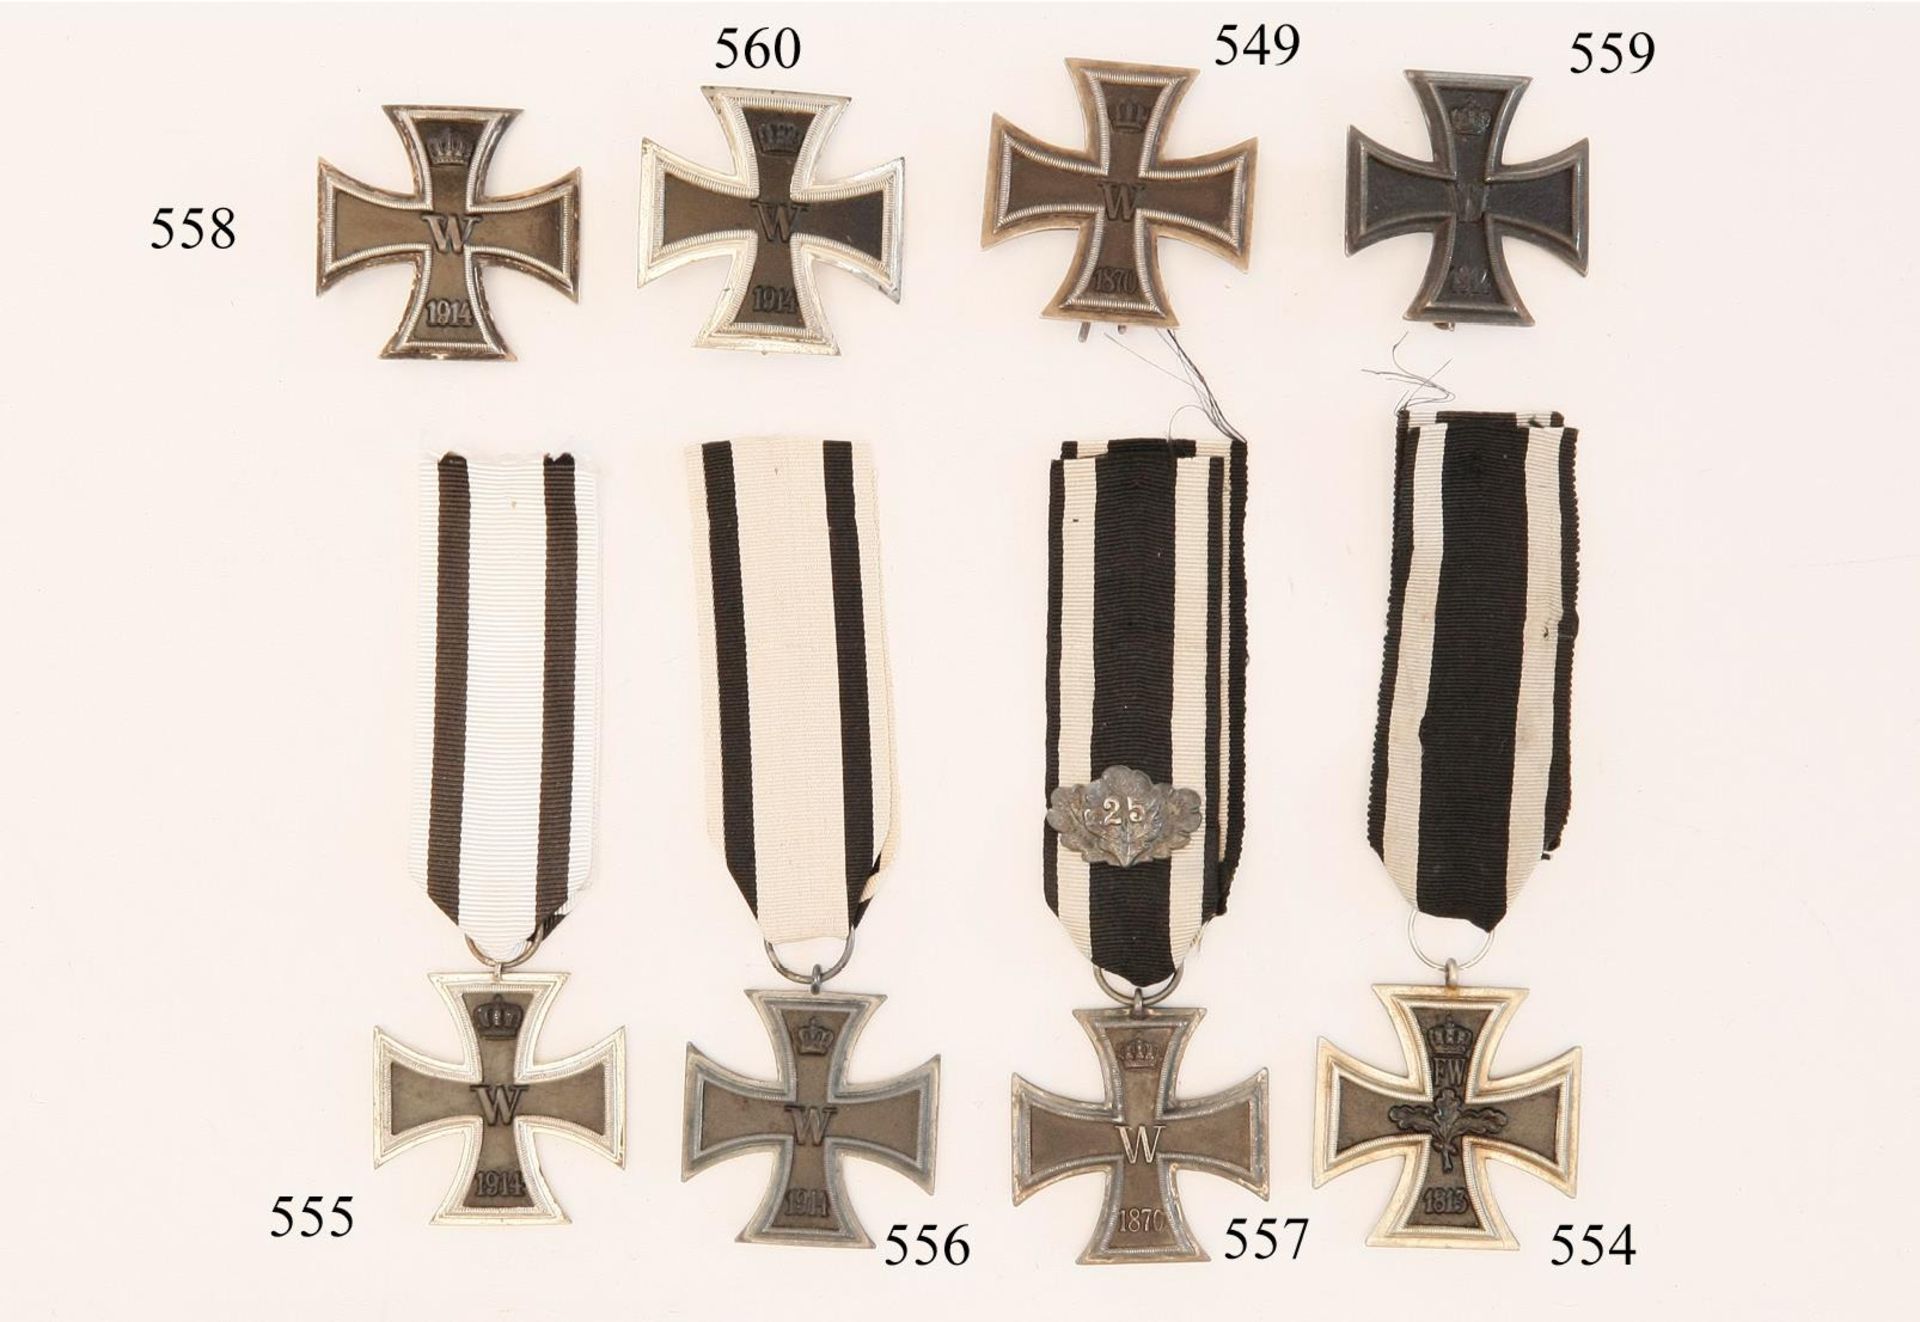 Eisernes Kreuz 1. Klasse, 1870